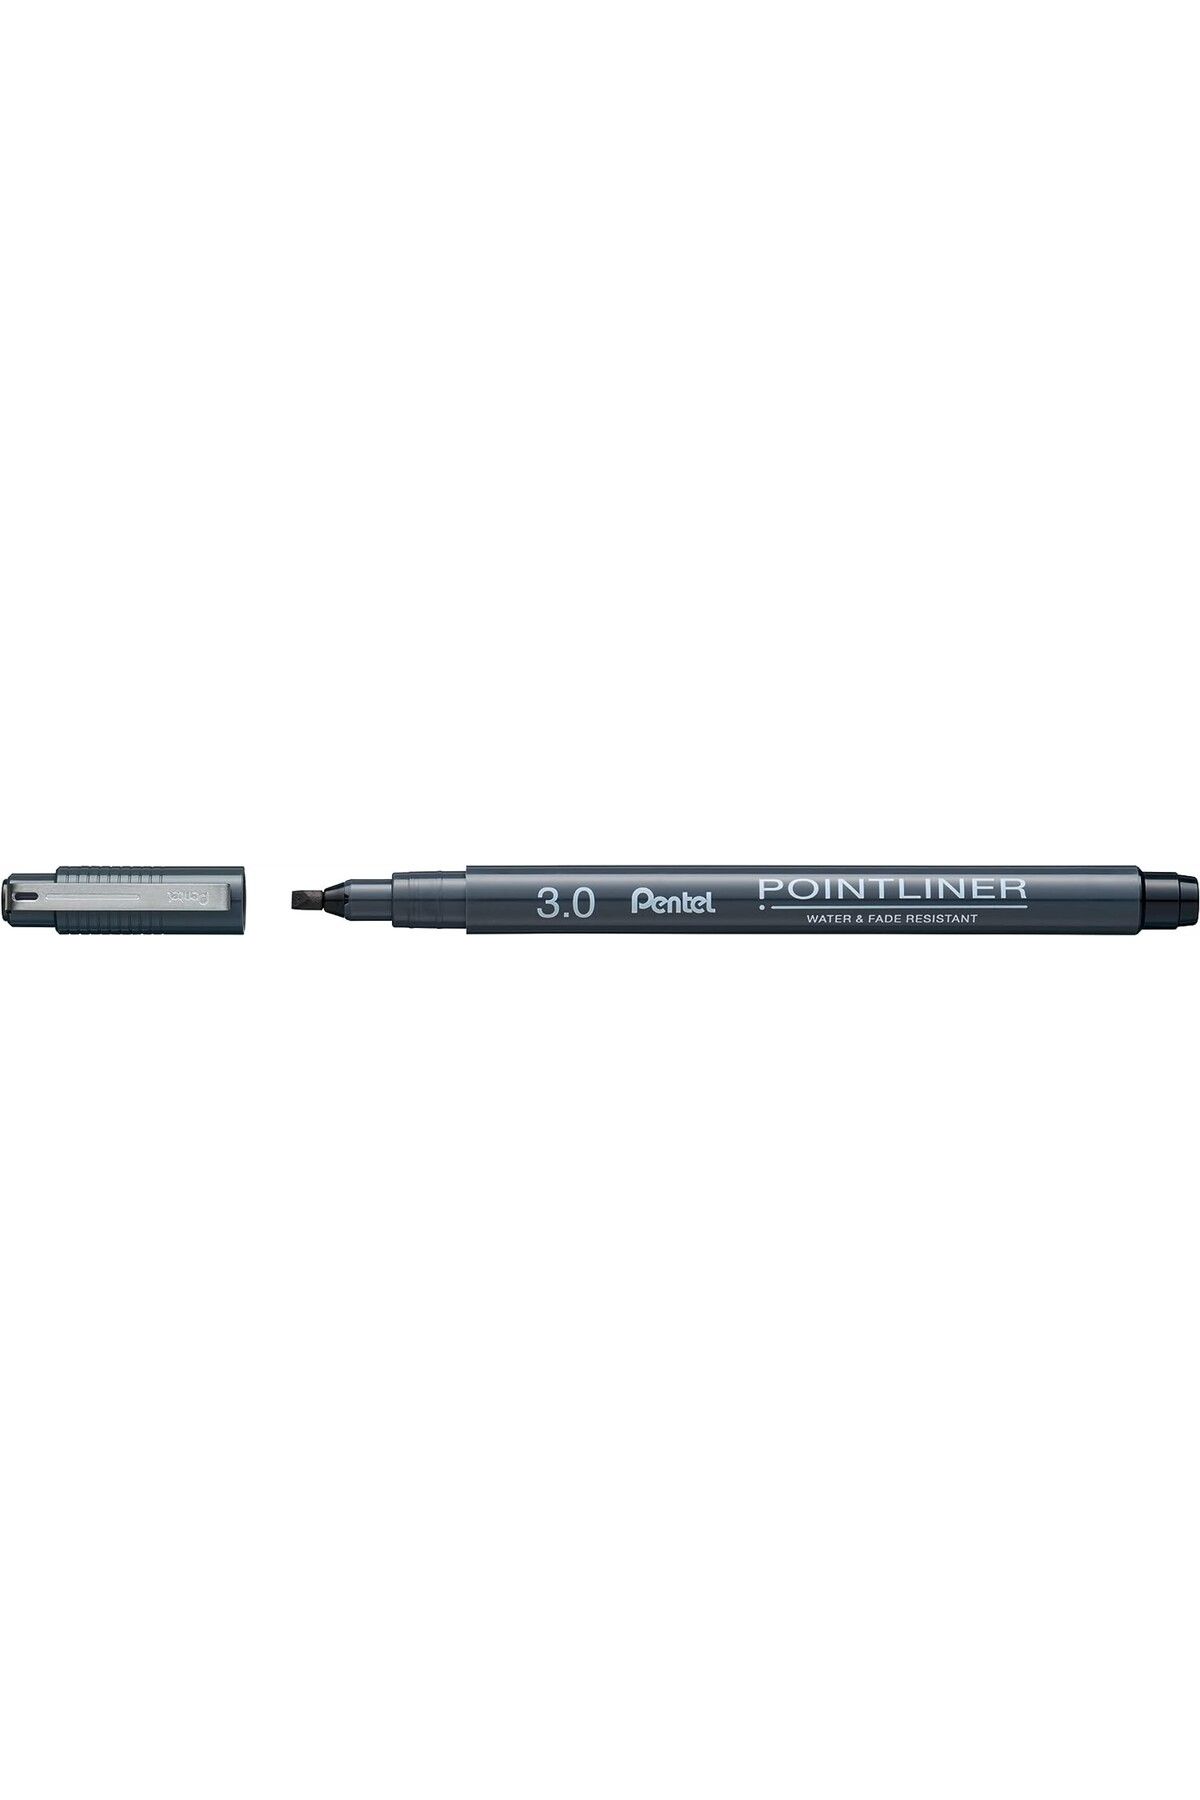 Pentel Pointliner 3.0mm Kesik Uçlu Kaligrafi Kalemi / S20p-c30a